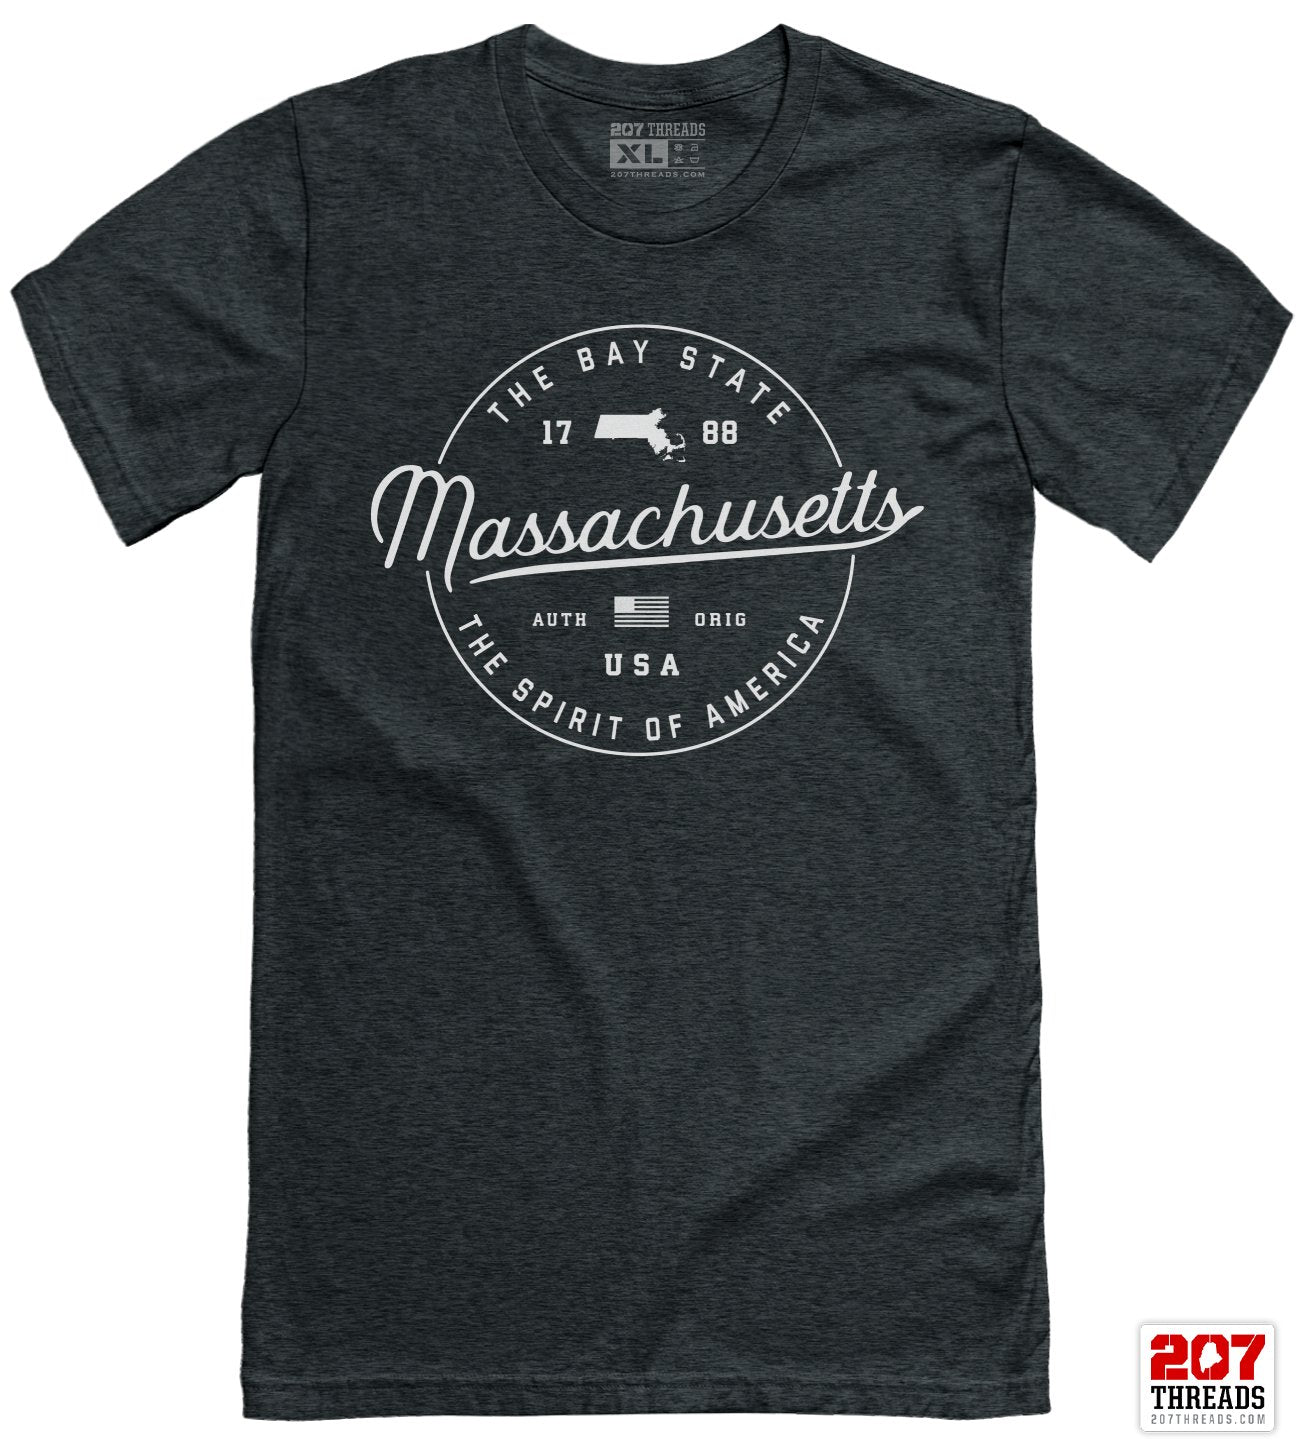 State of Massachusetts T-Shirt - Soft MA Tee